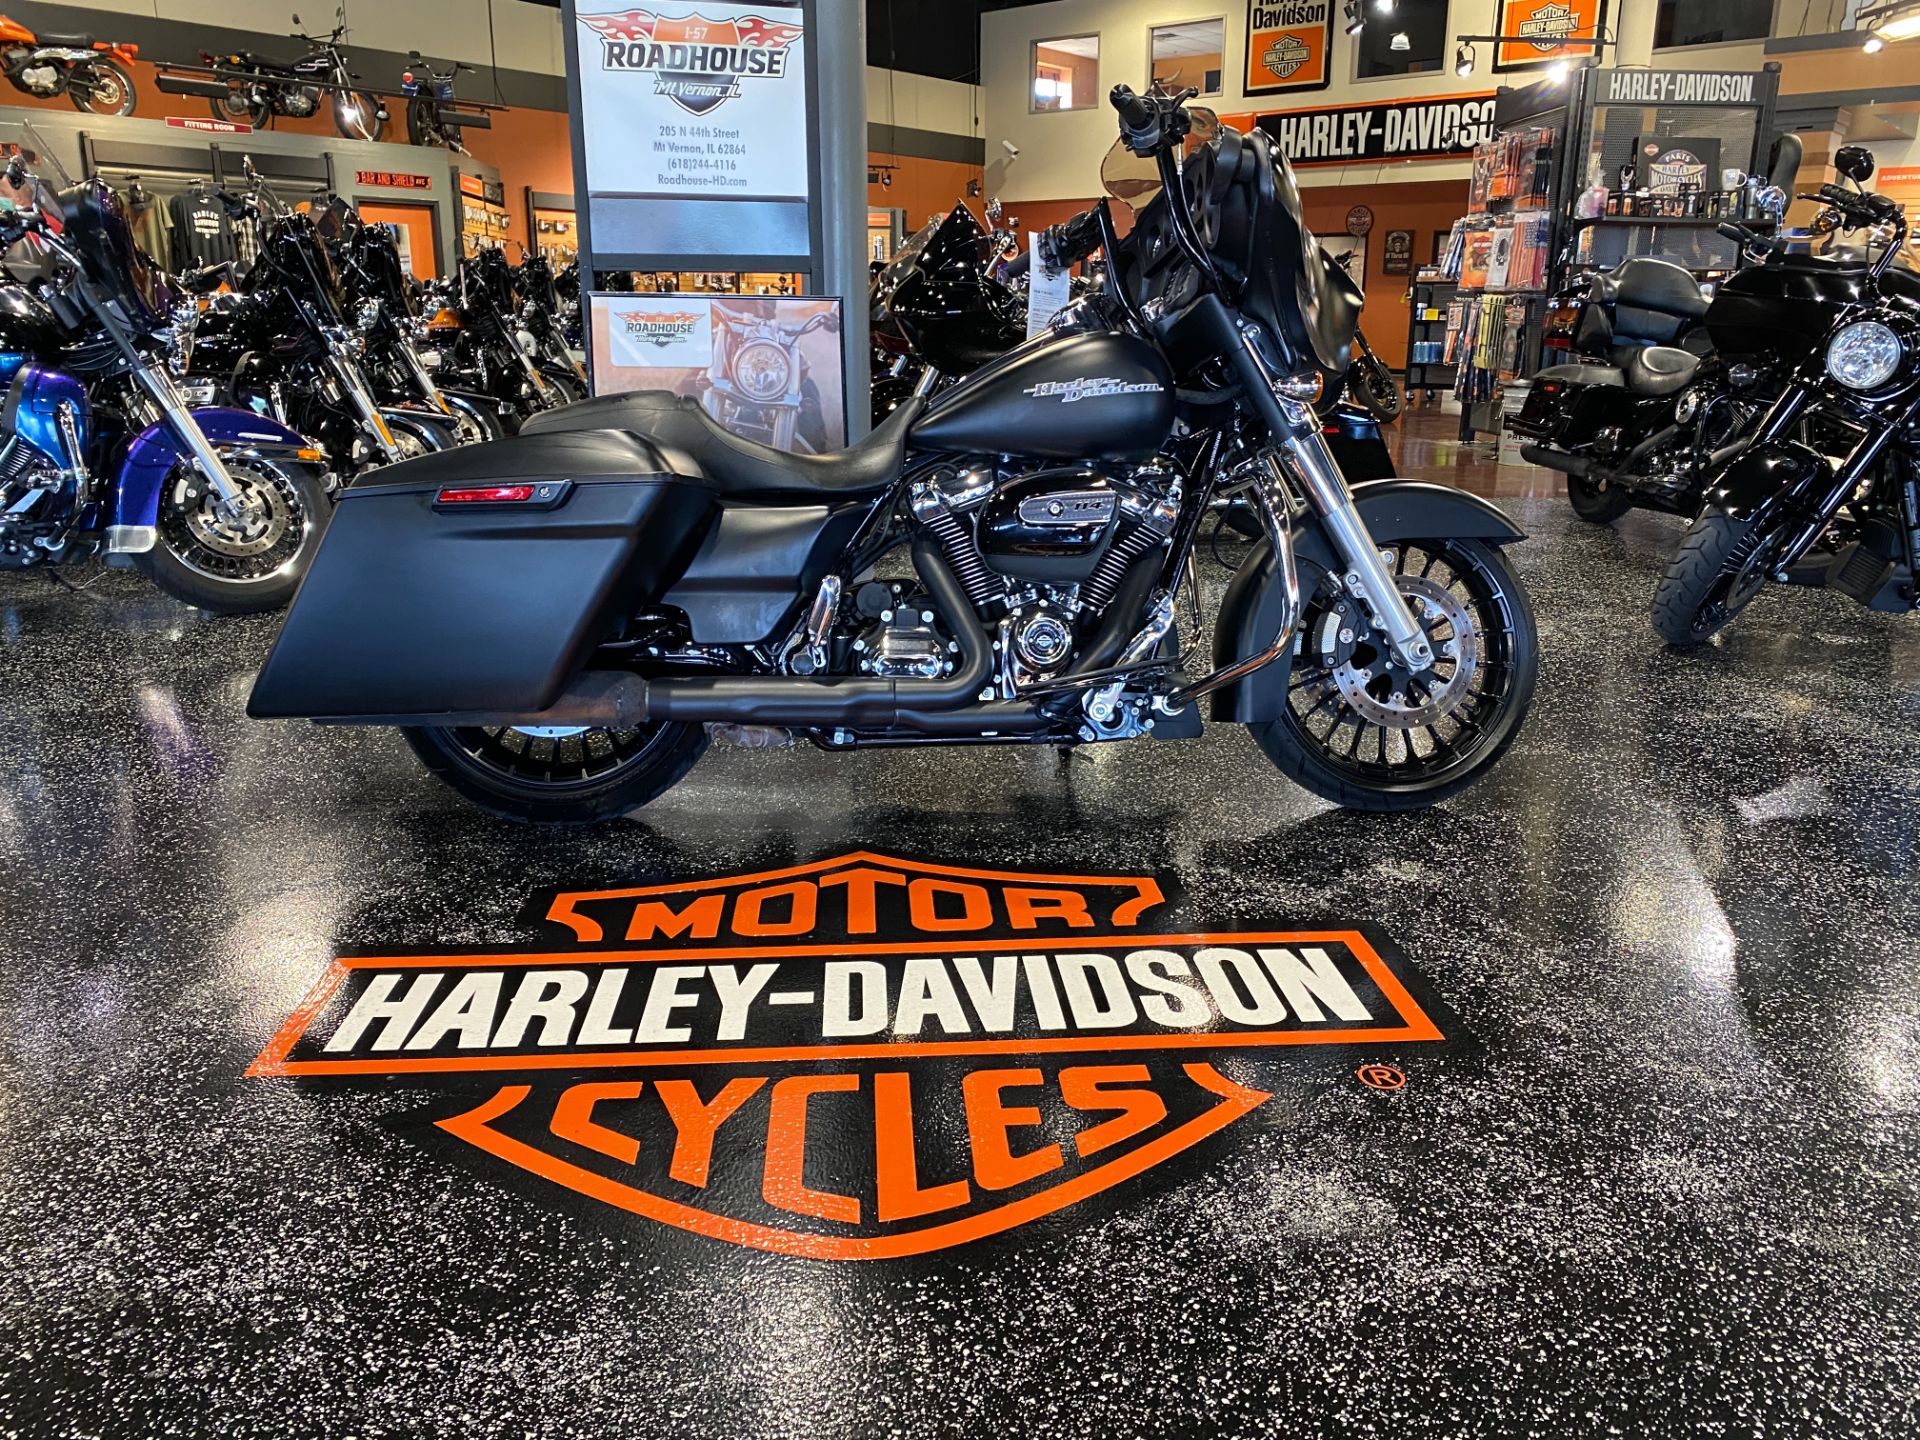 Used 2018 Harley Davidson Street Glide, Harley Davidson Headboard And Footboard Set